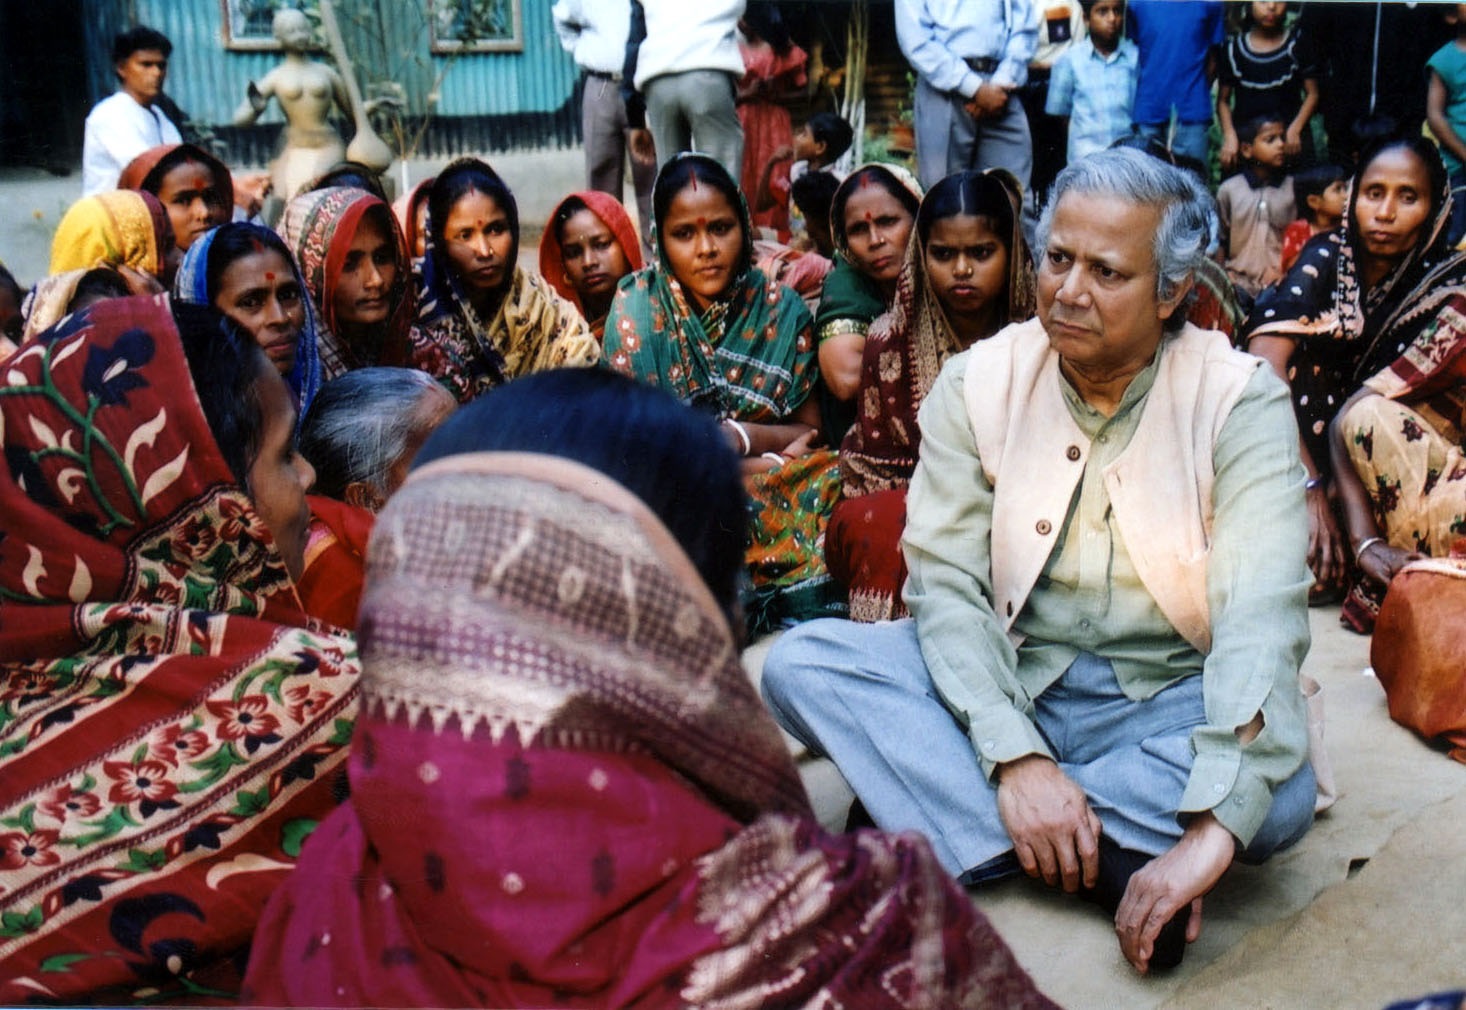 Dr. Muhammad Yunus: Creating a Legacy of Social Change Through Microcredit